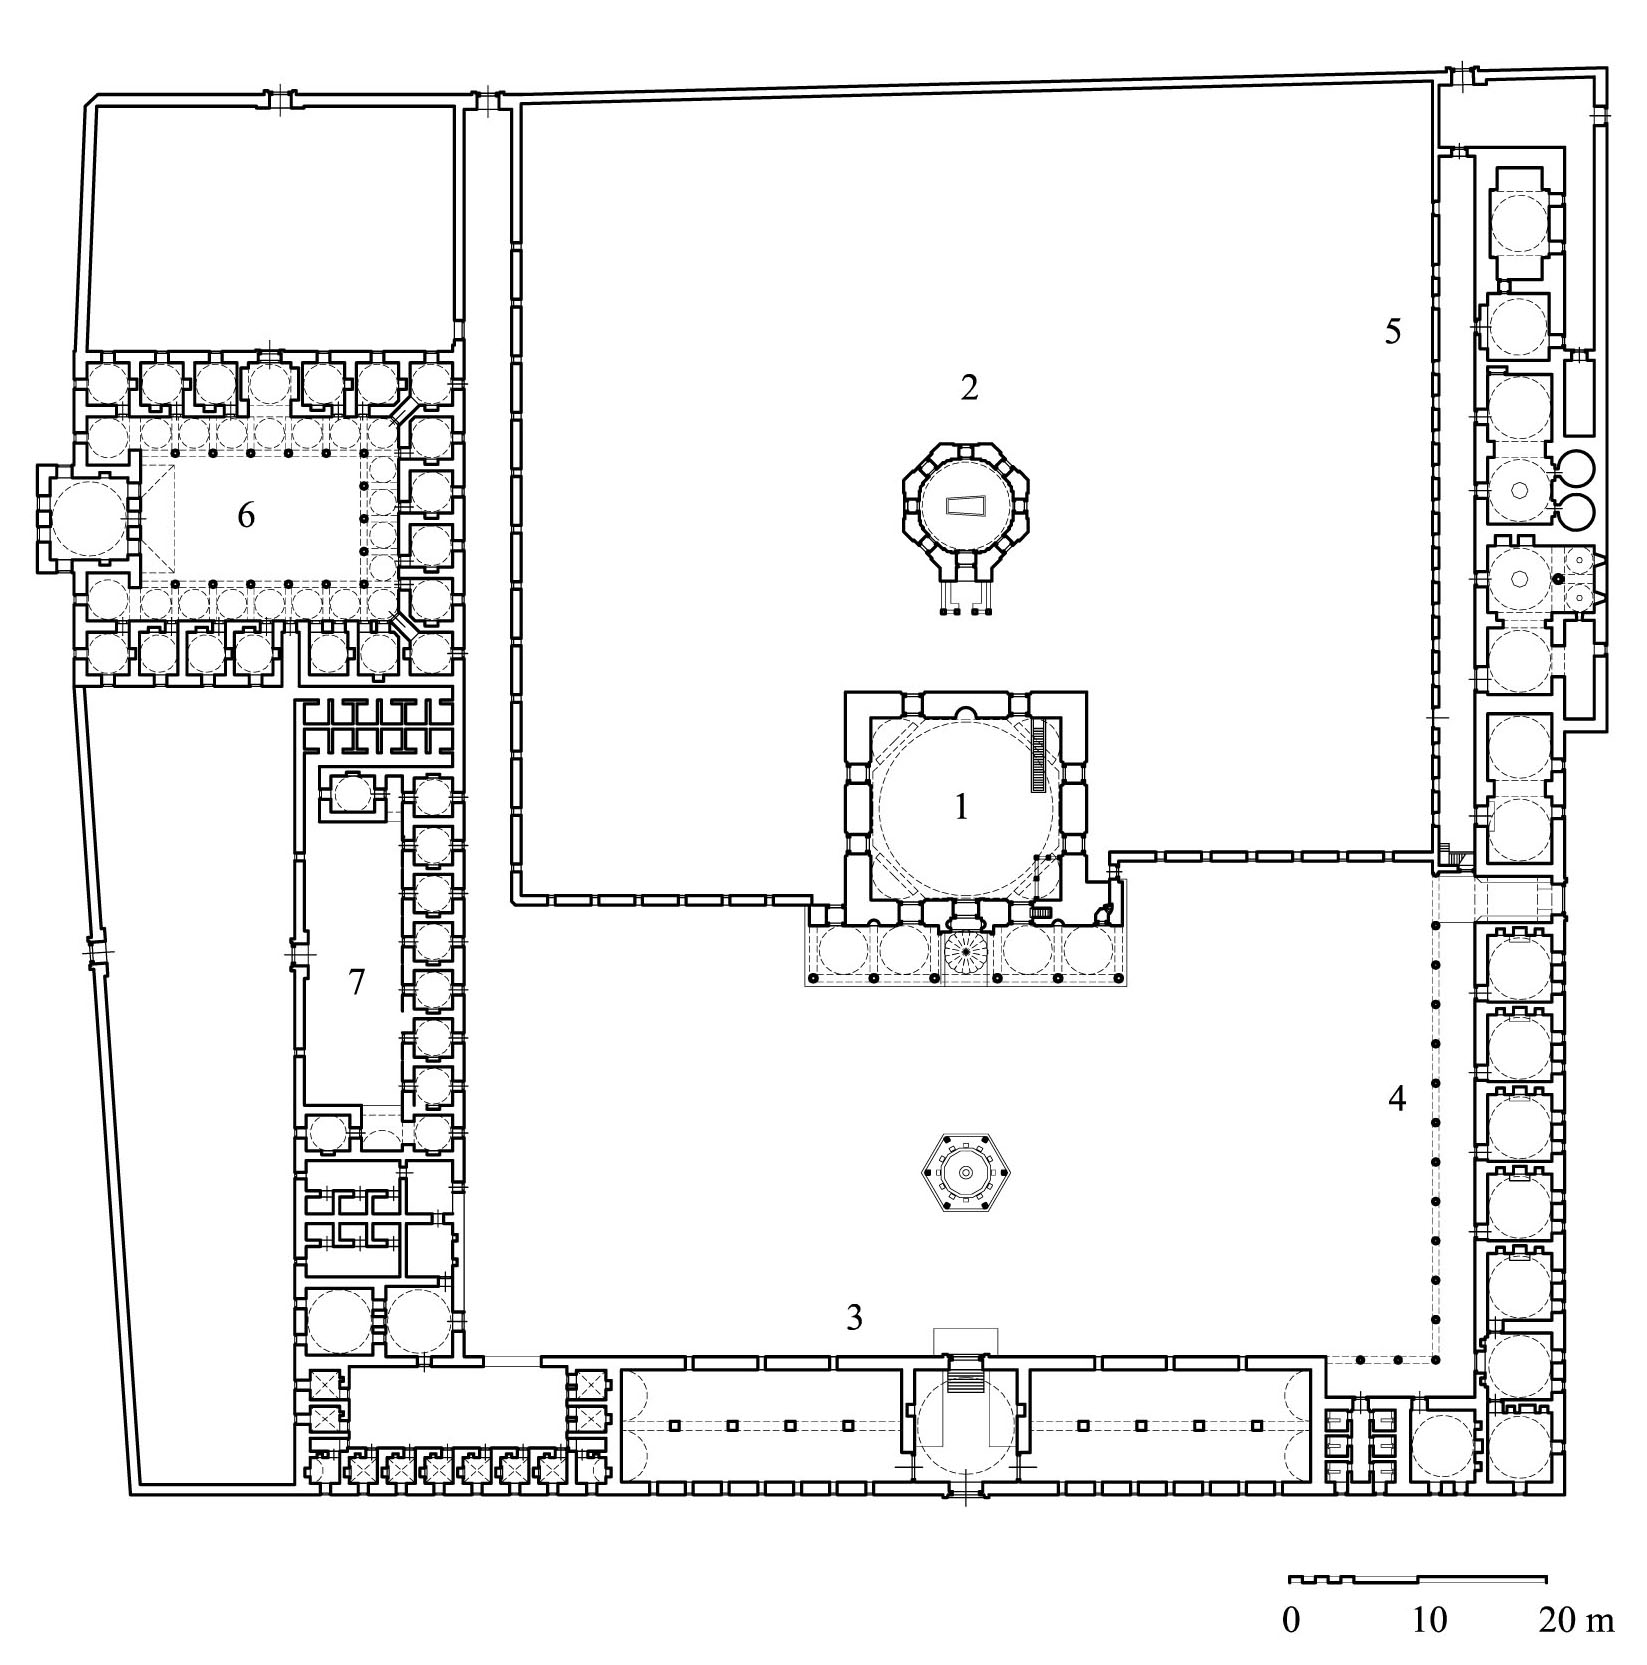 Çoban Mustafa Pasa Külliyesi - Floor plan of complex, showing (1) mosque, (2) mausoleum, (3)  double caravanserai, (4) guest rooms, (5) hospice, (6) madrasa, (7) convent. DWG file in AutoCAD 2000 format. Click the download button to download a zipped file containing the .dwg file.